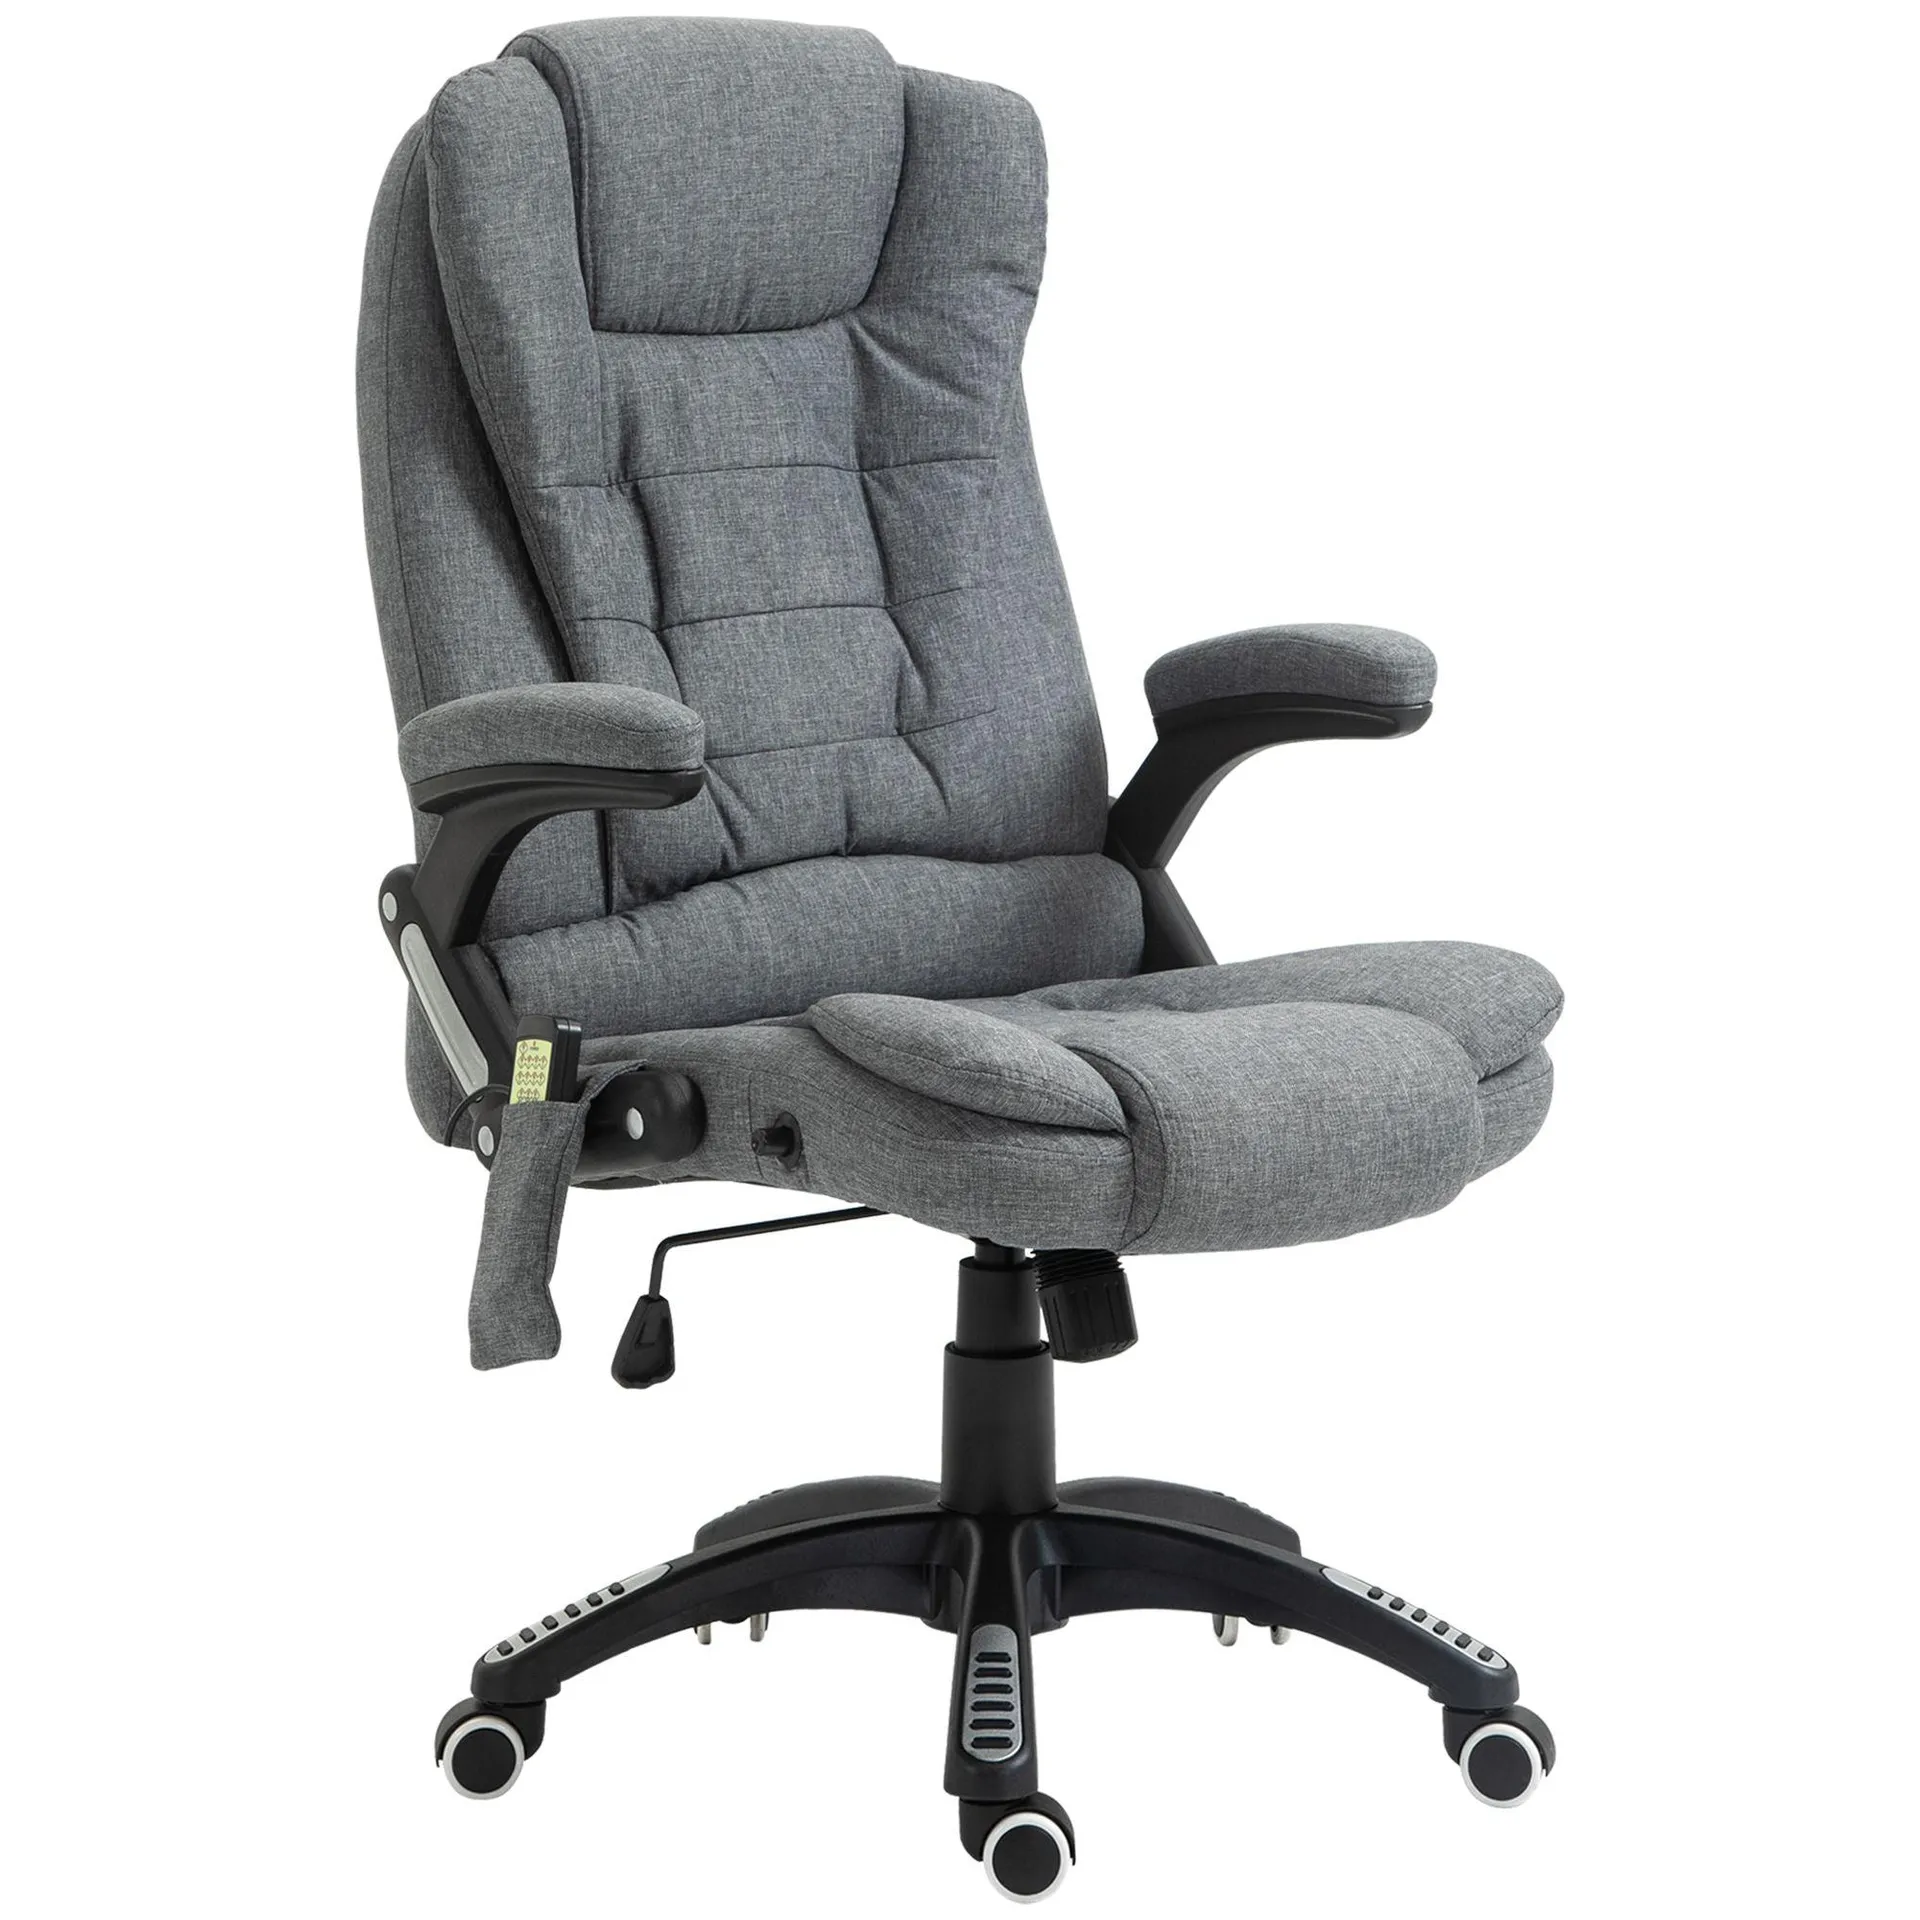 ProperAV Extra Ergonomic Reclining Adjustable Heated Massage Executive Office Chair